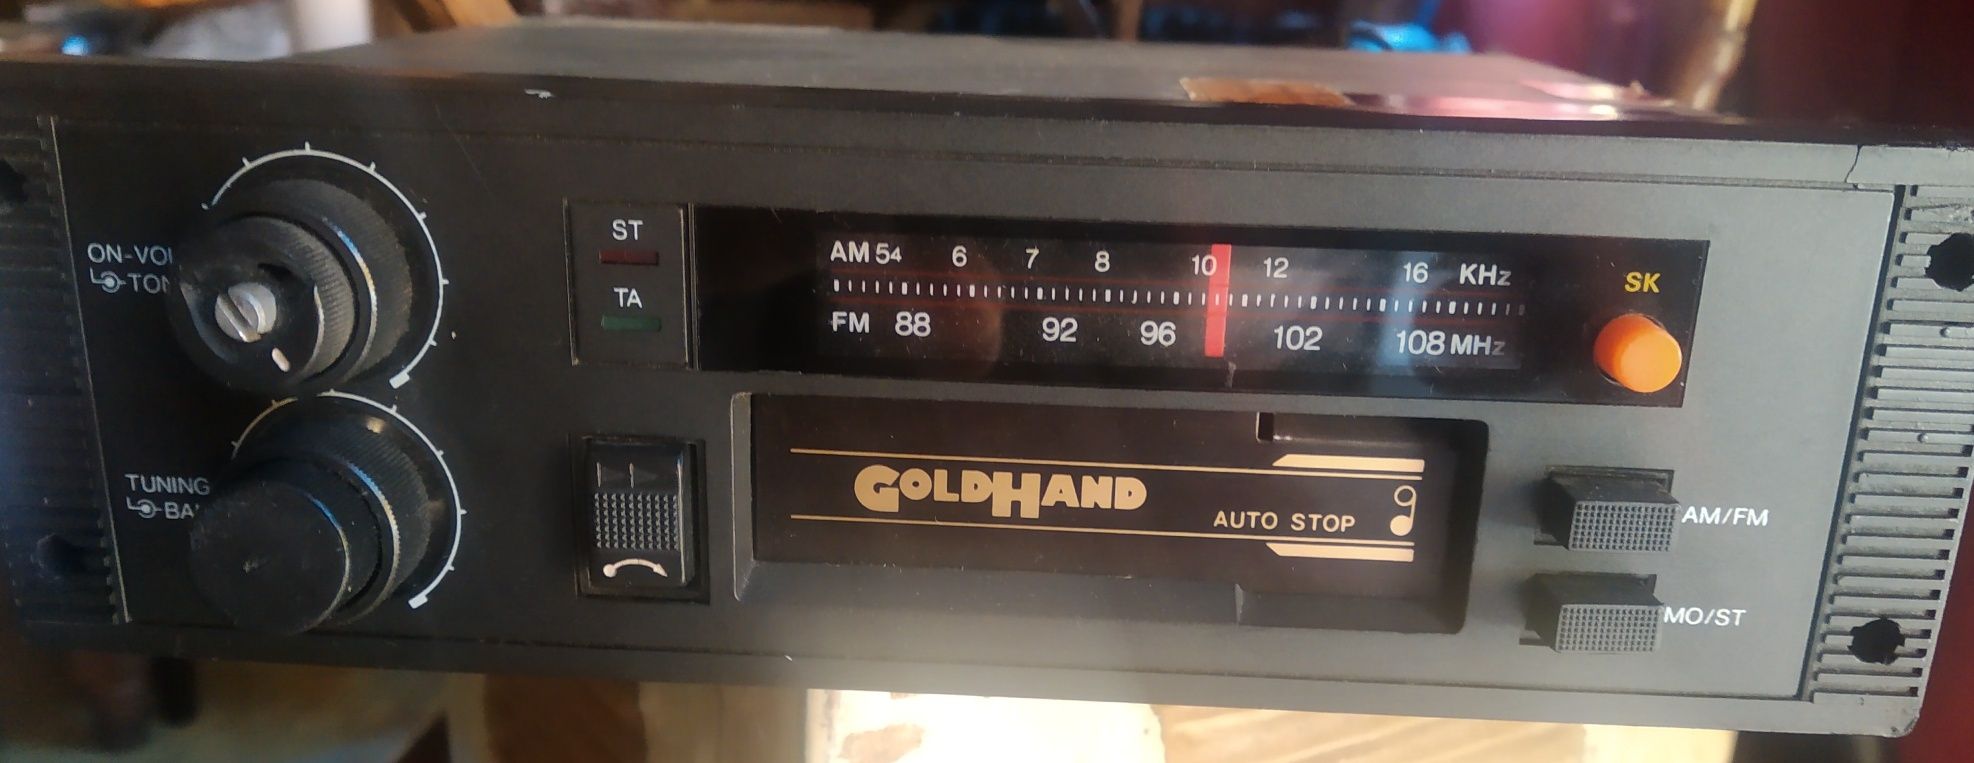 Auto radio autoradio goldhand